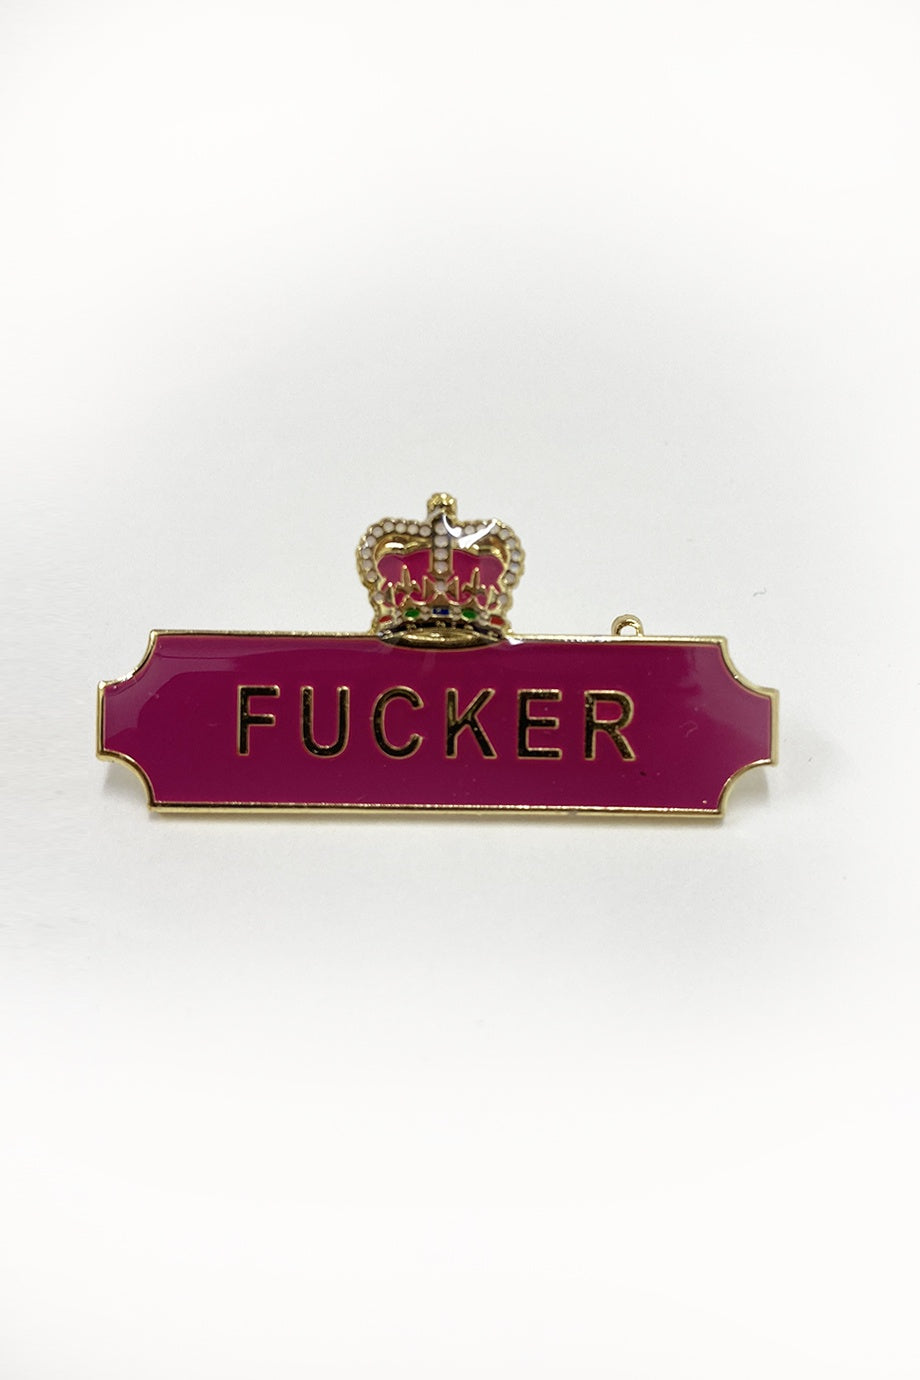 WORLD Enamel Badge - FUCKER